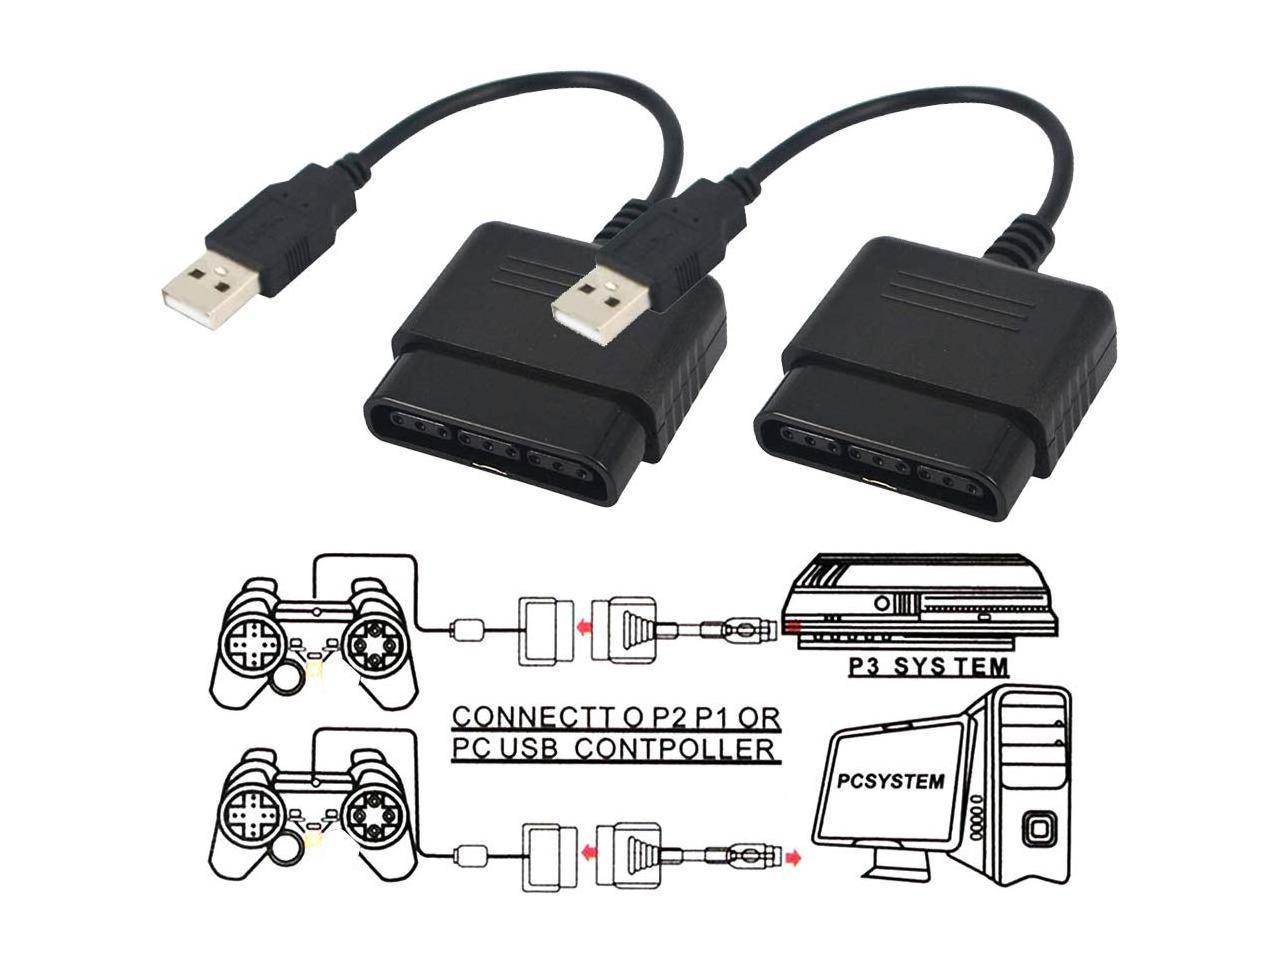 Соединение через usb. USB контроллер сони плейстейшен 2 к ПК. Адаптер для джойстика ps2 Озон. Разъем джойстика ps2. Переходник для контроллера ps2.